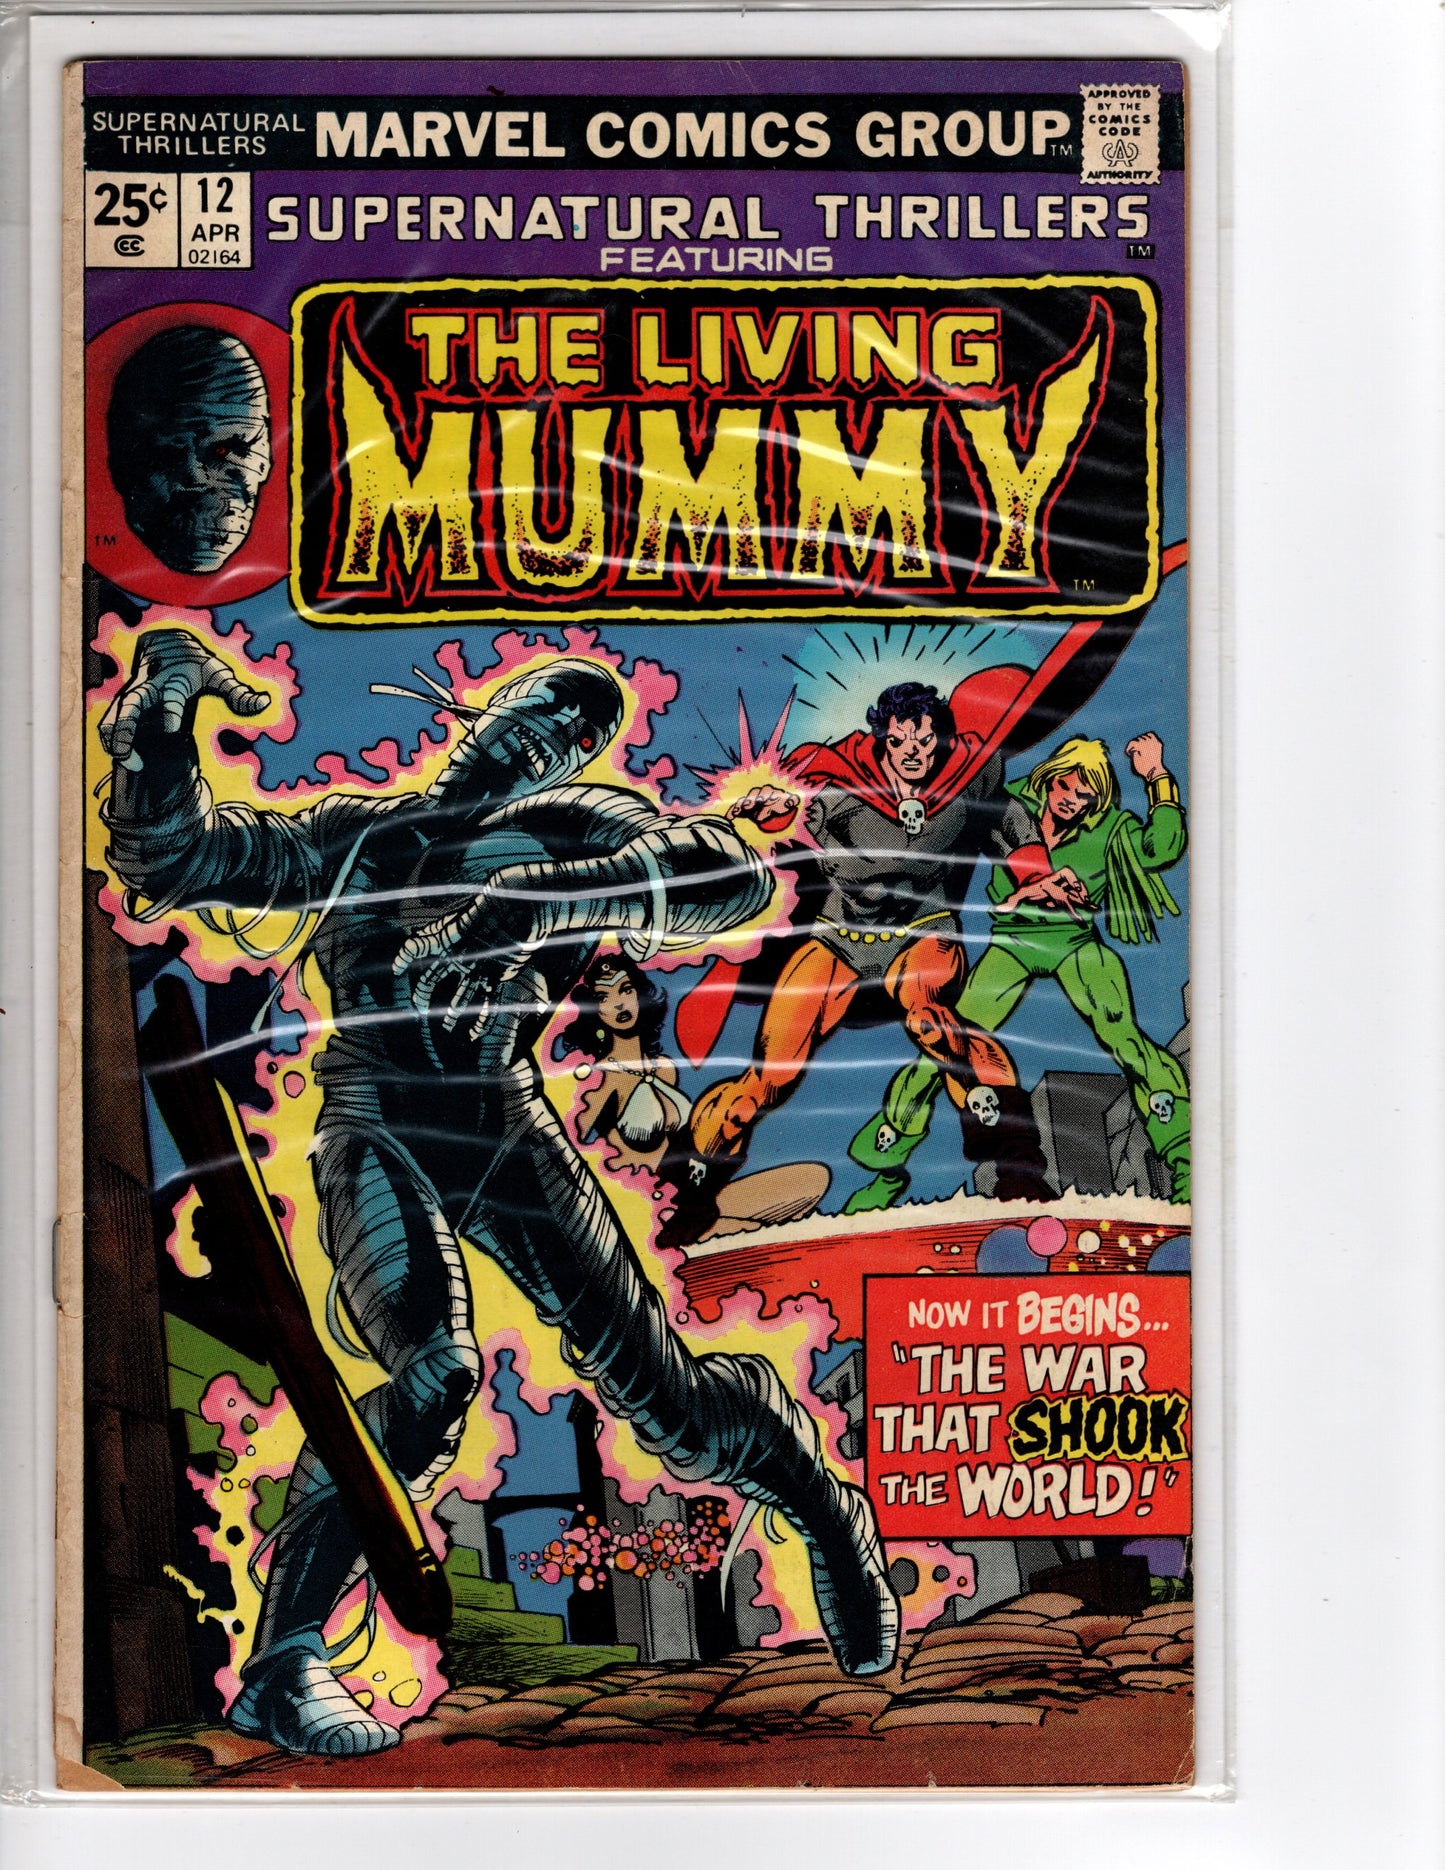 The Living Mummy #12